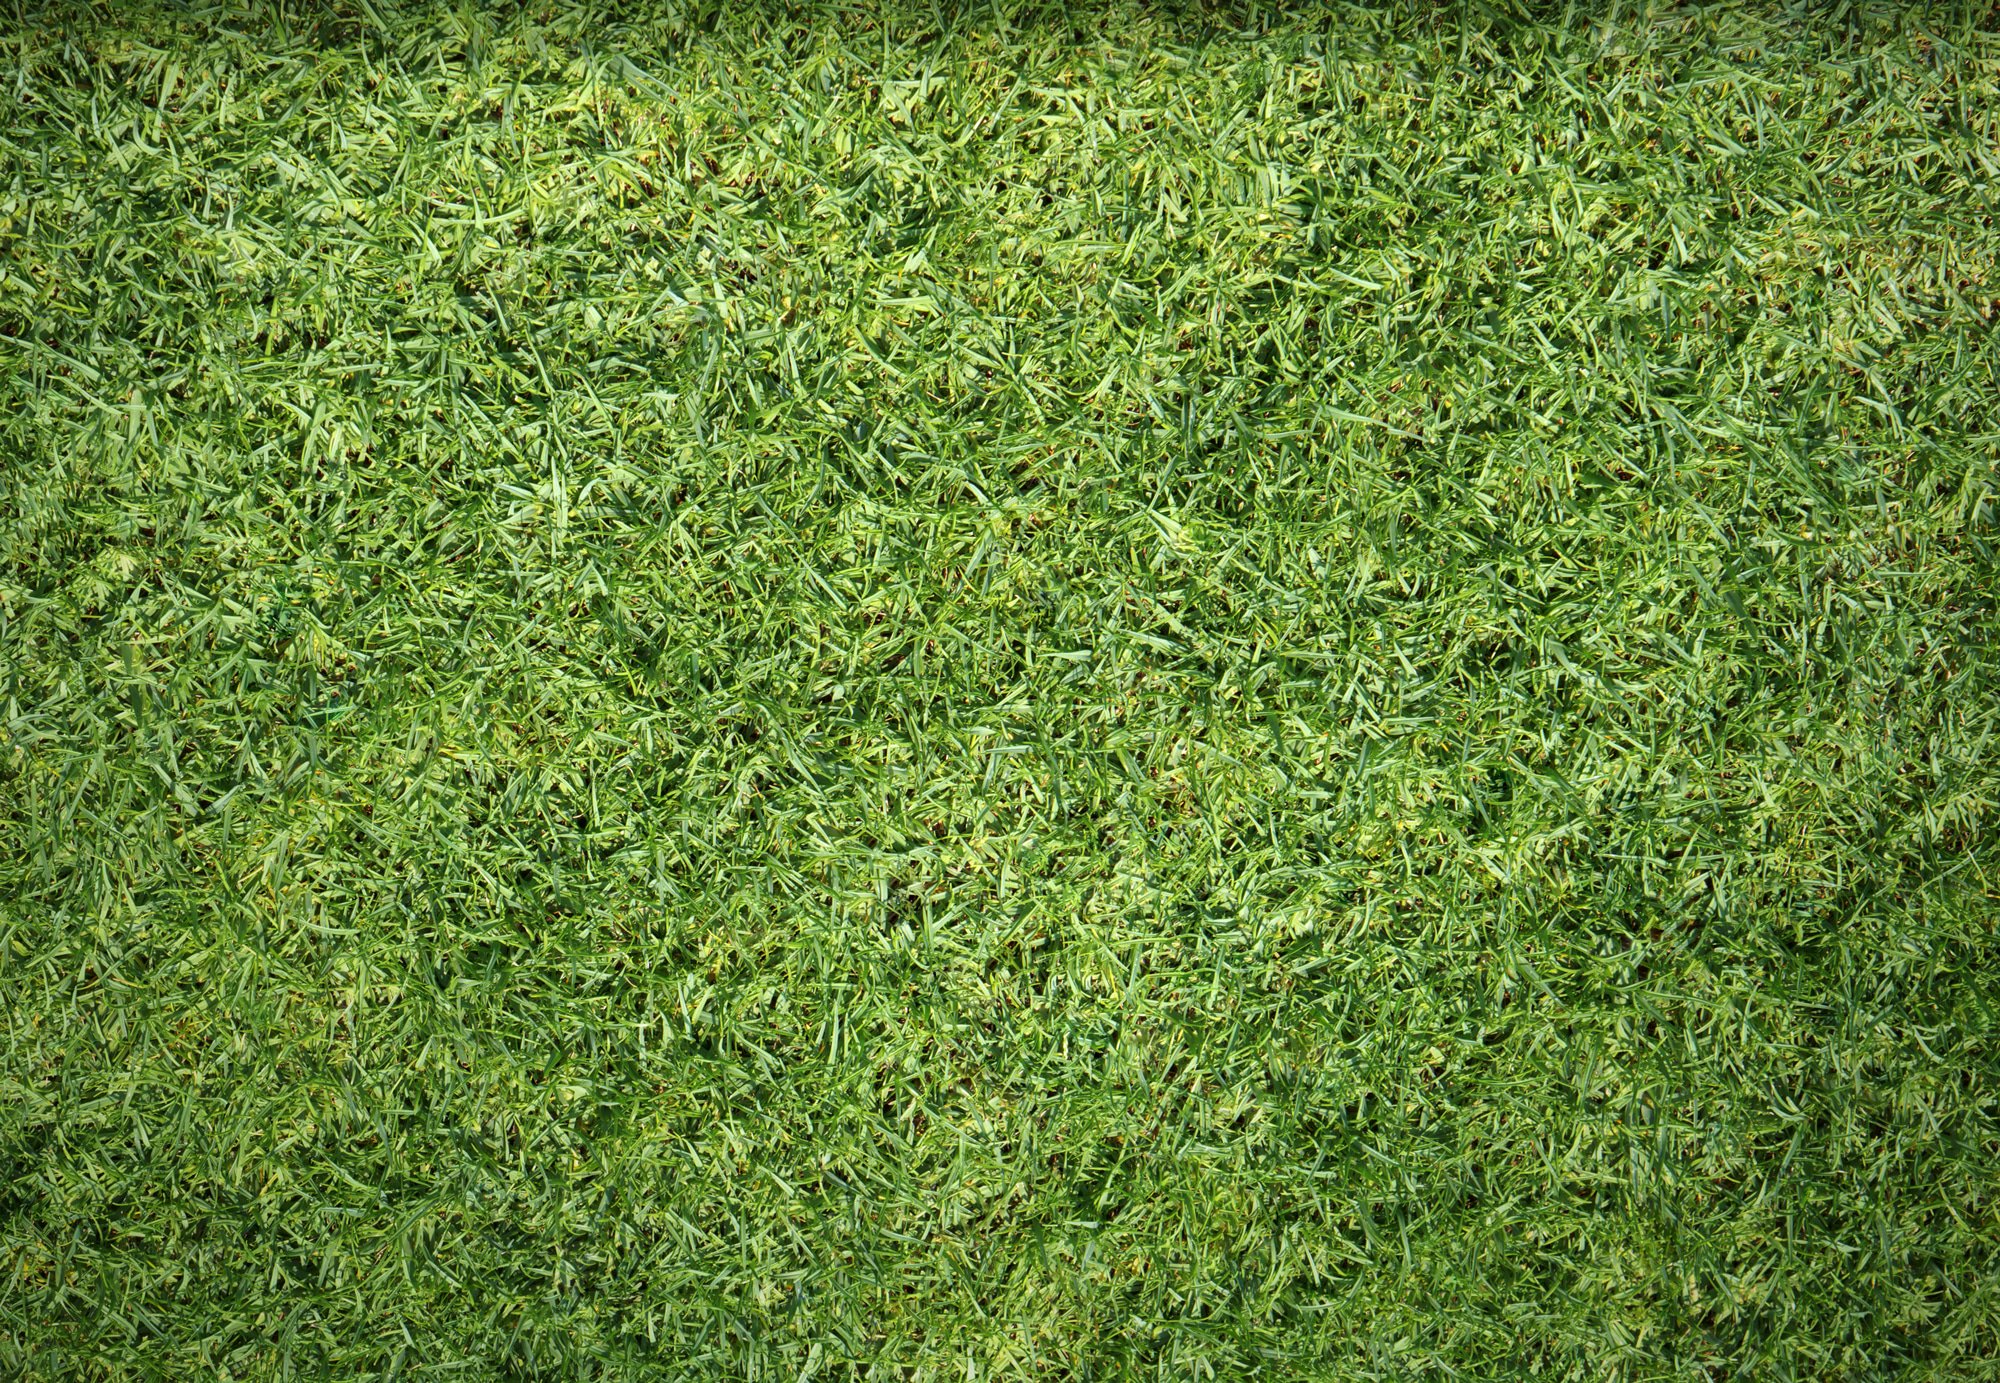 Grass Texture Vector at Vectorified.com | Collection of Grass Texture ...